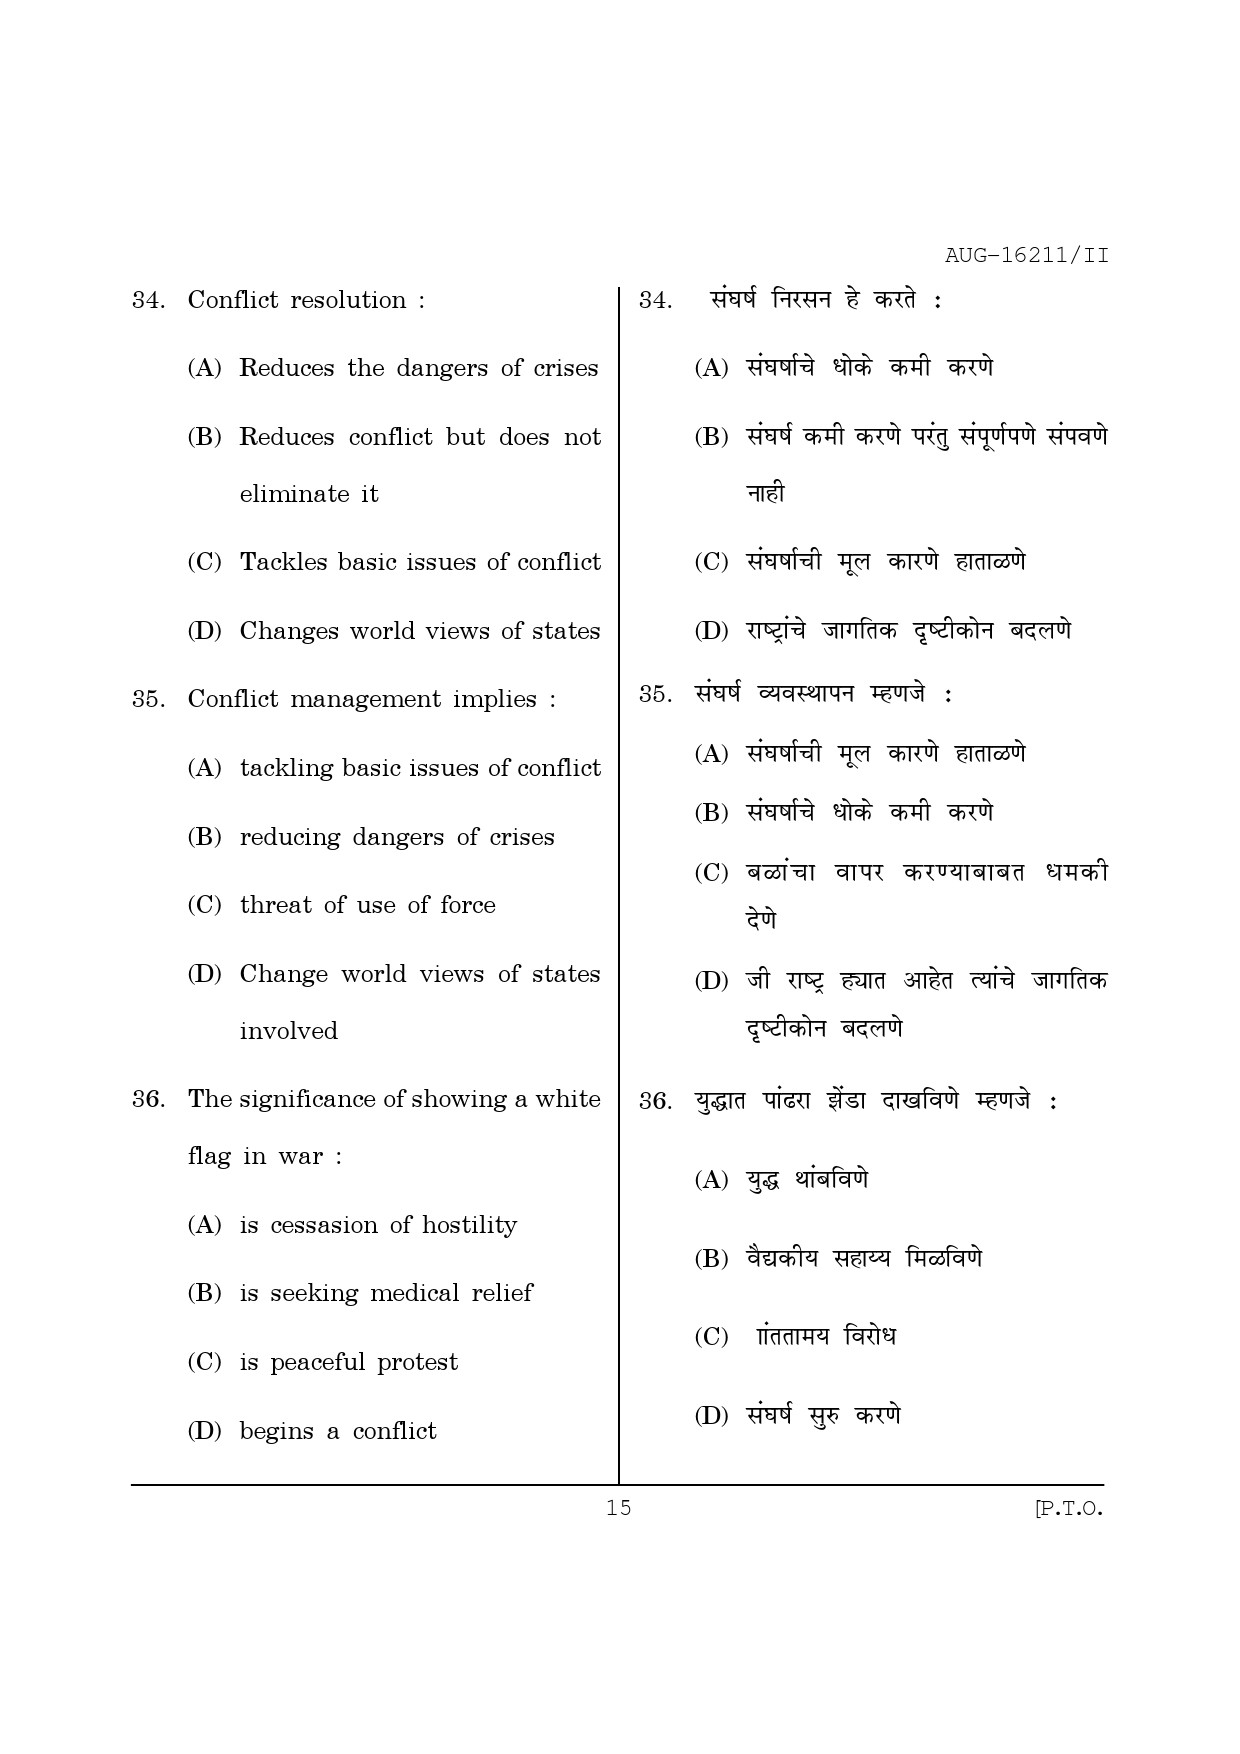 Maharashtra SET Defence and Strategic Studies Question Paper II August 2011 15